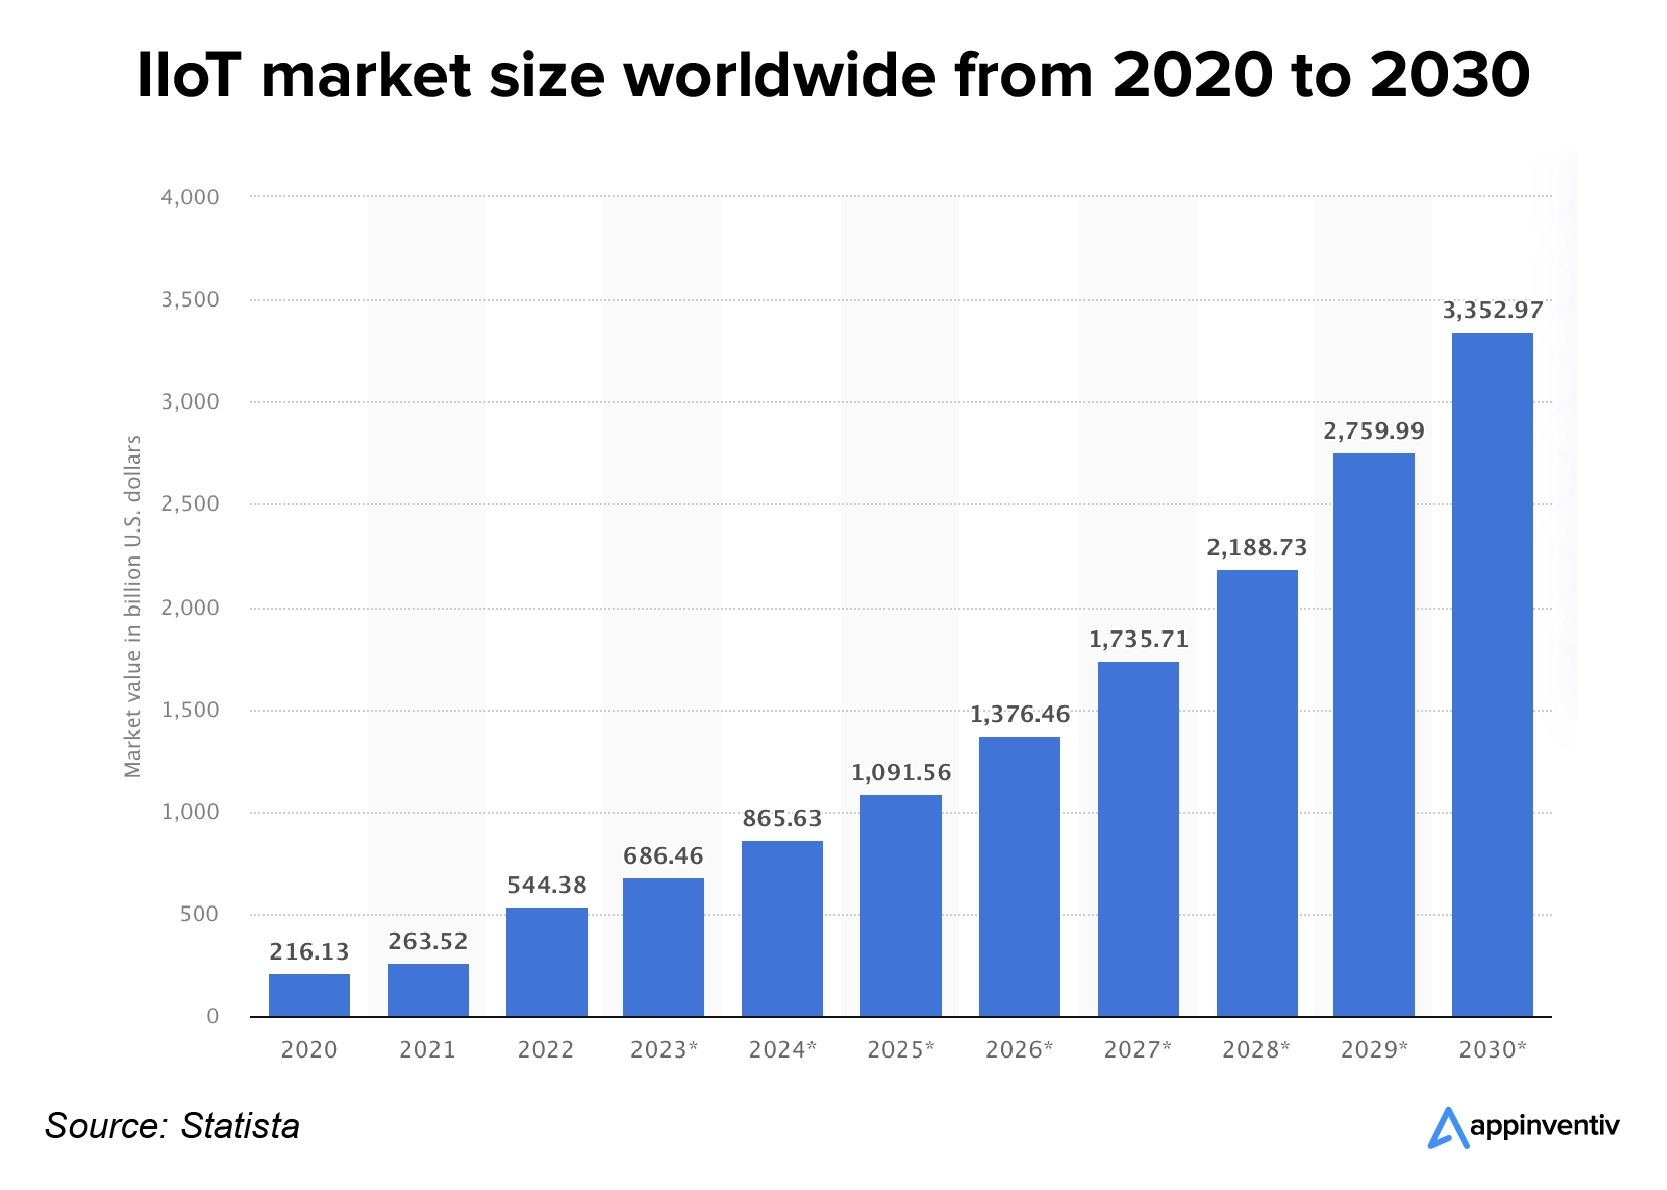 IIoT market size worldwide from 2020 to 2030